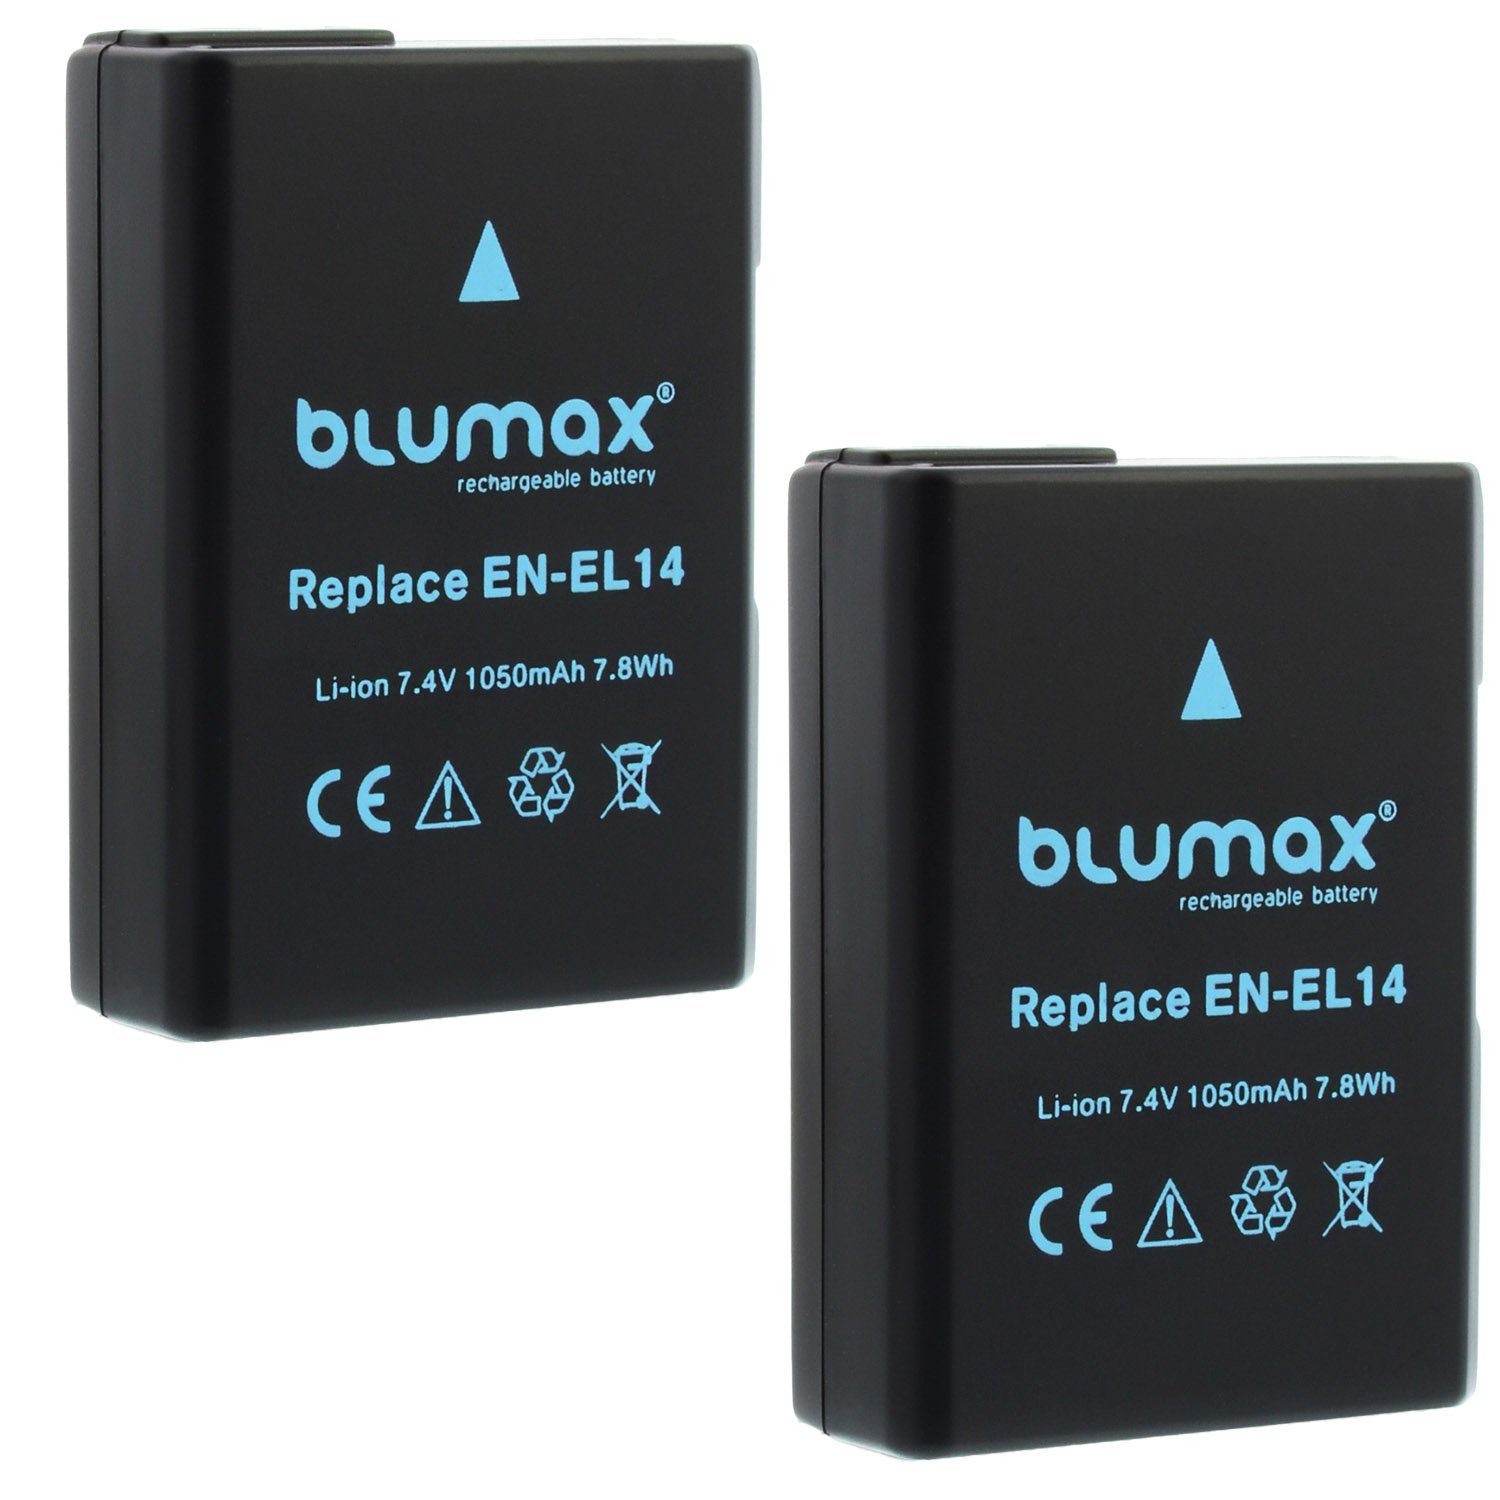 Blumax 2x EN-EL14 D3300 D5300 D5500 D5600 P7800 1050 mAh Kamera-Akku | Kamera-Akkus